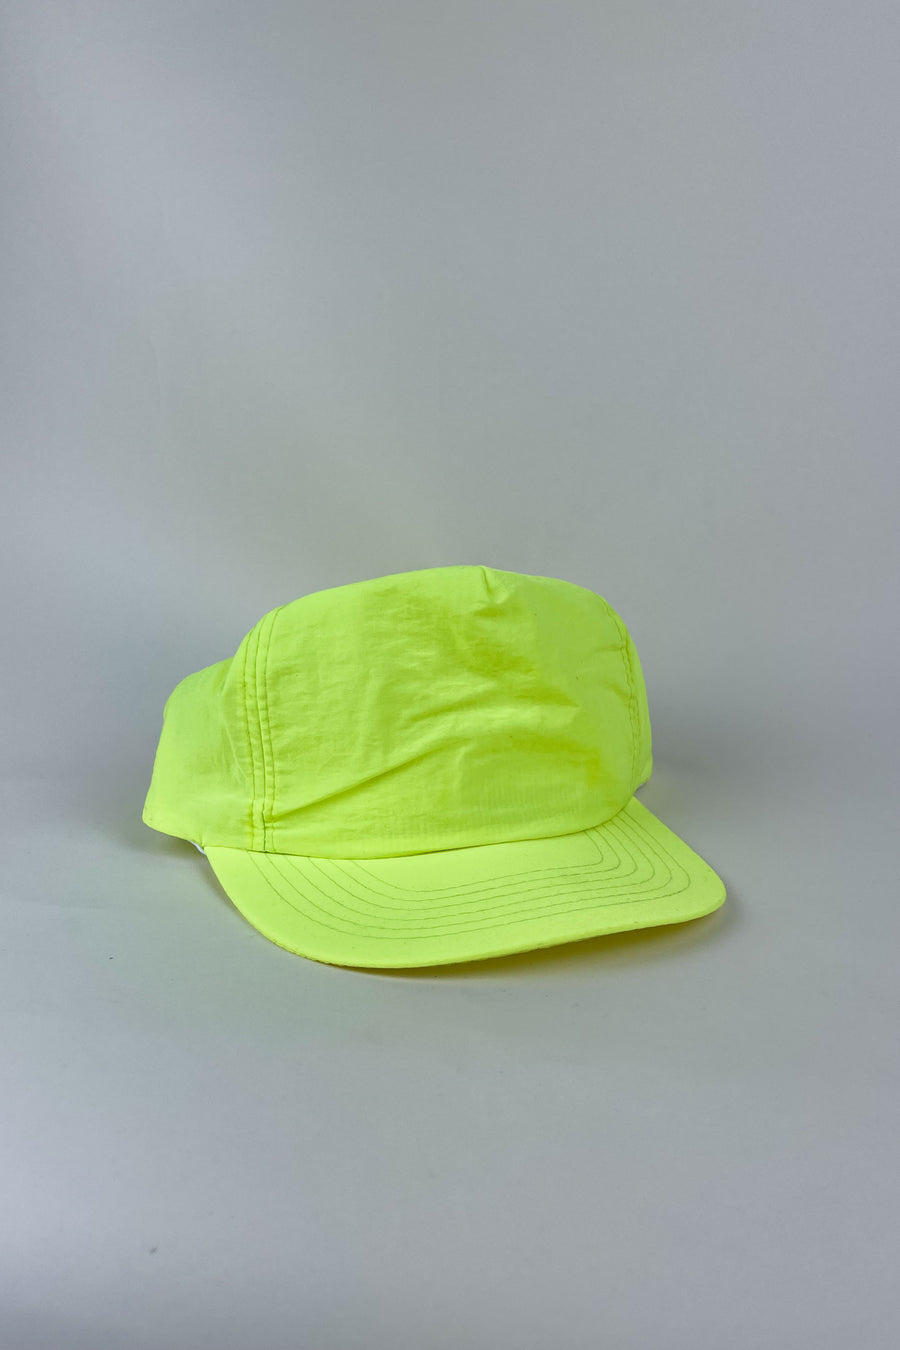 Vintage Deadstock Highlighter Green Yellow Snapback Hat